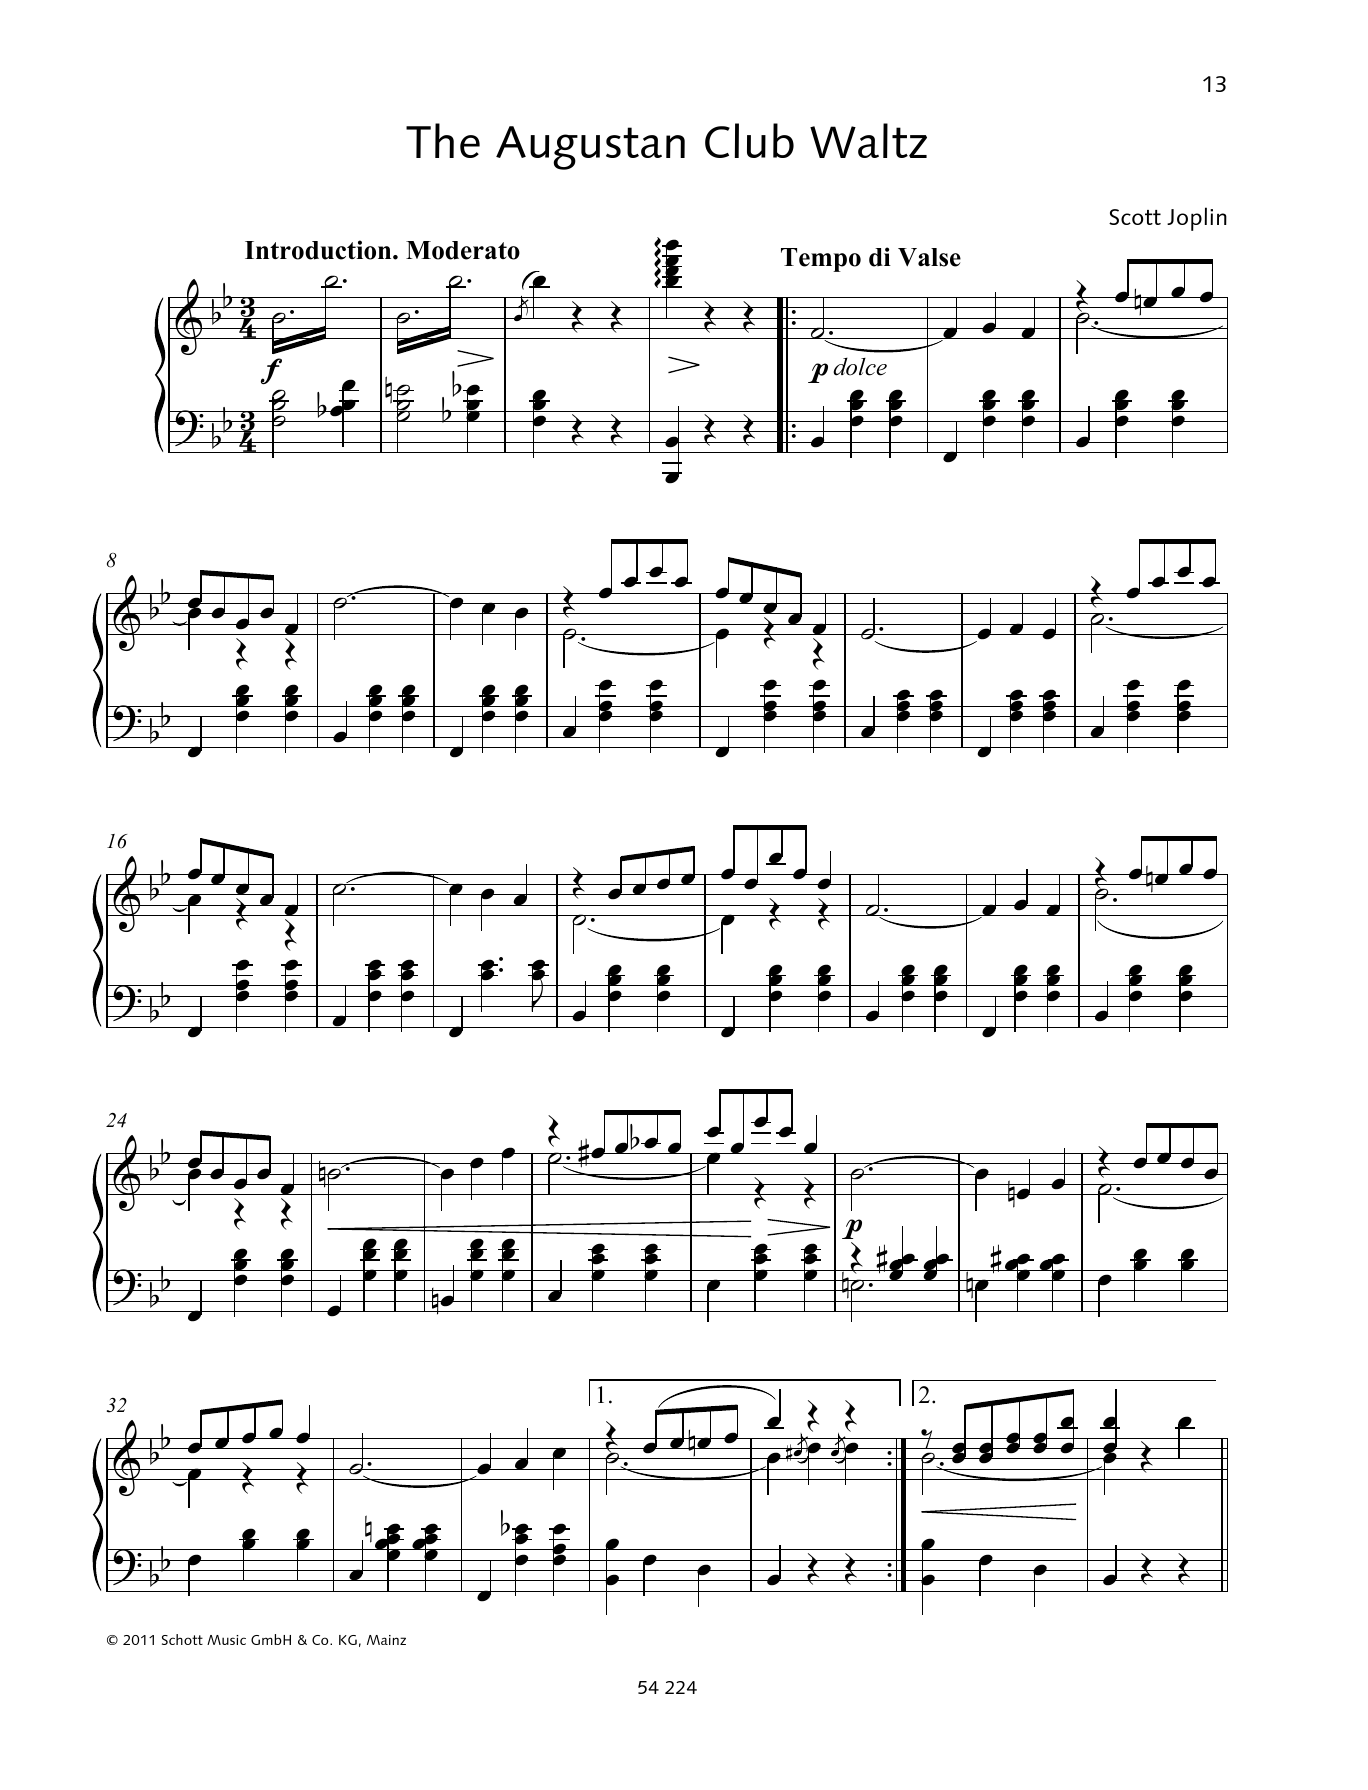 Scott Joplin The Augustan Club Waltz Sheet Music Notes & Chords for Piano Solo - Download or Print PDF